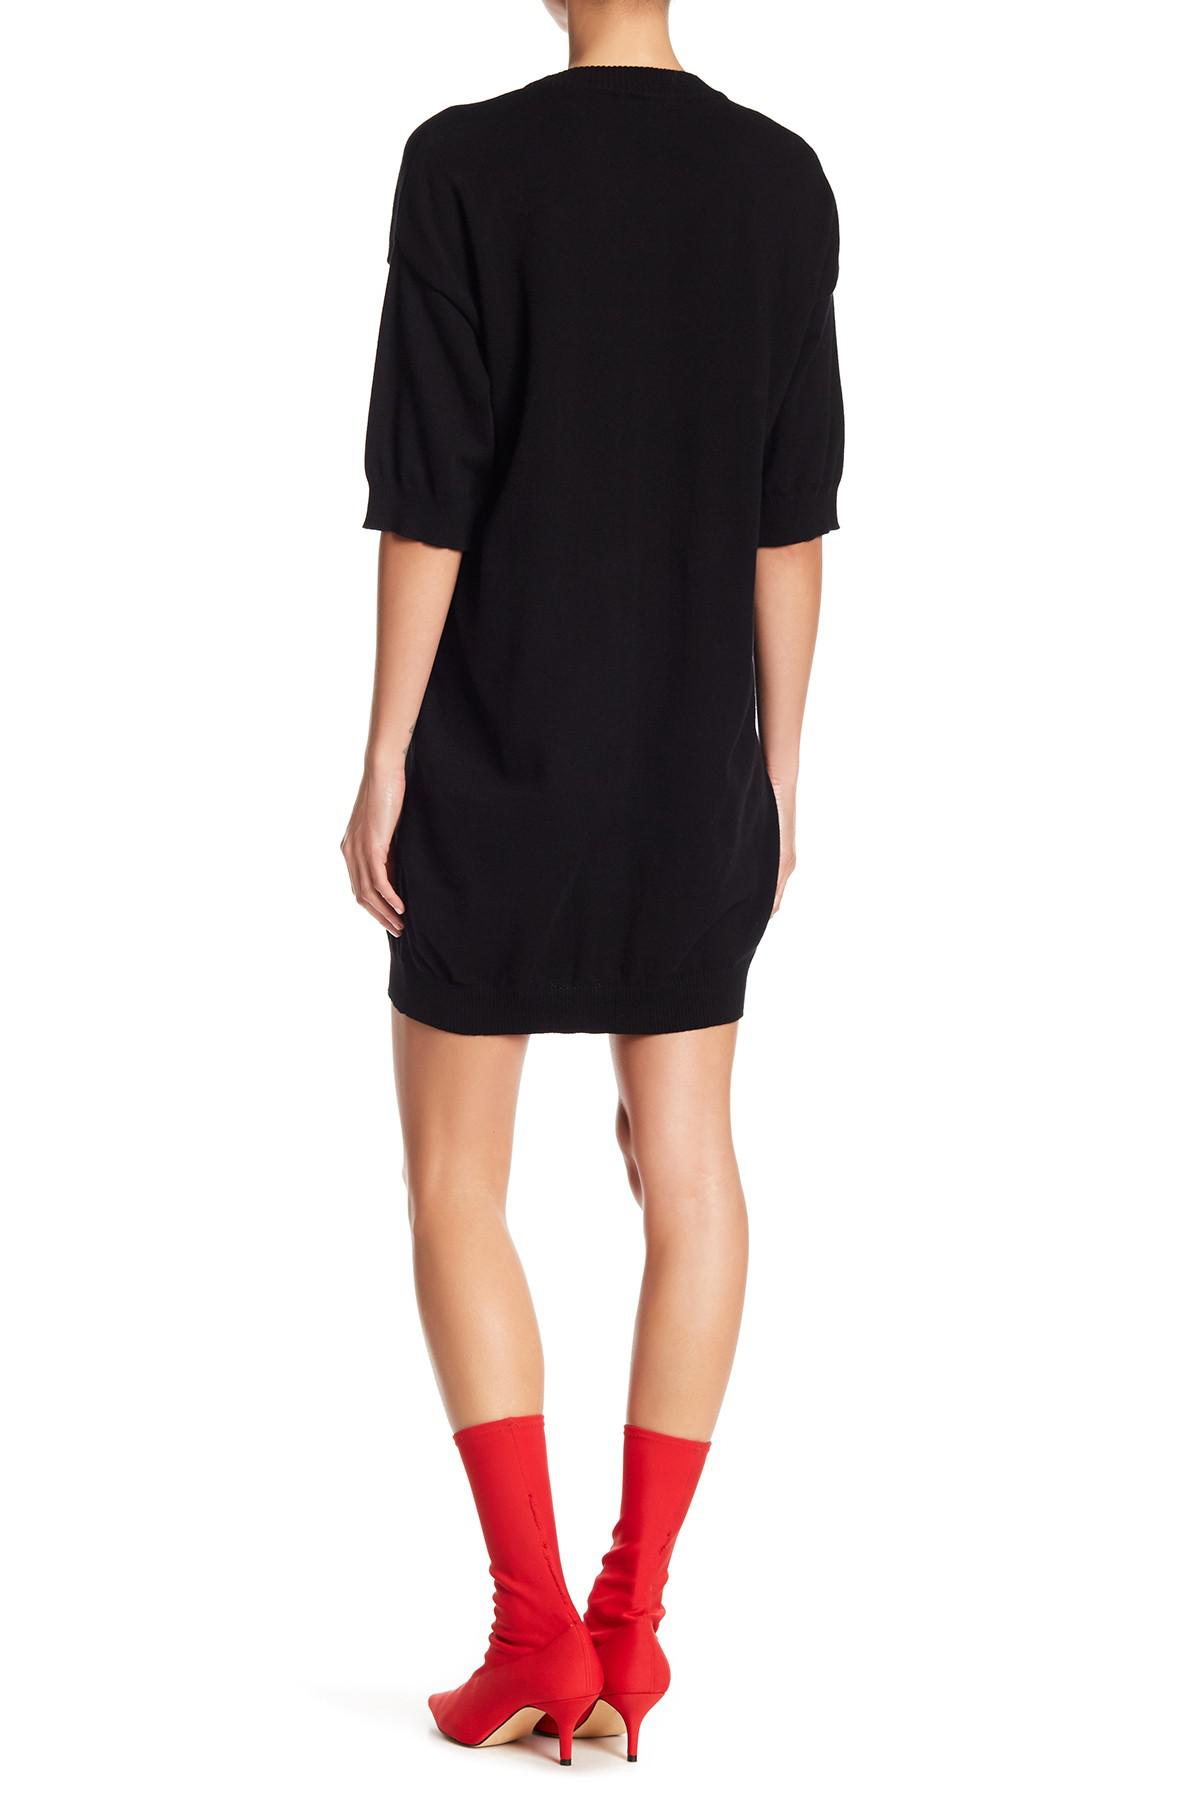 Love Moschino Cotton Vestito Popstar Knit T-shirt Dress in Black - Lyst